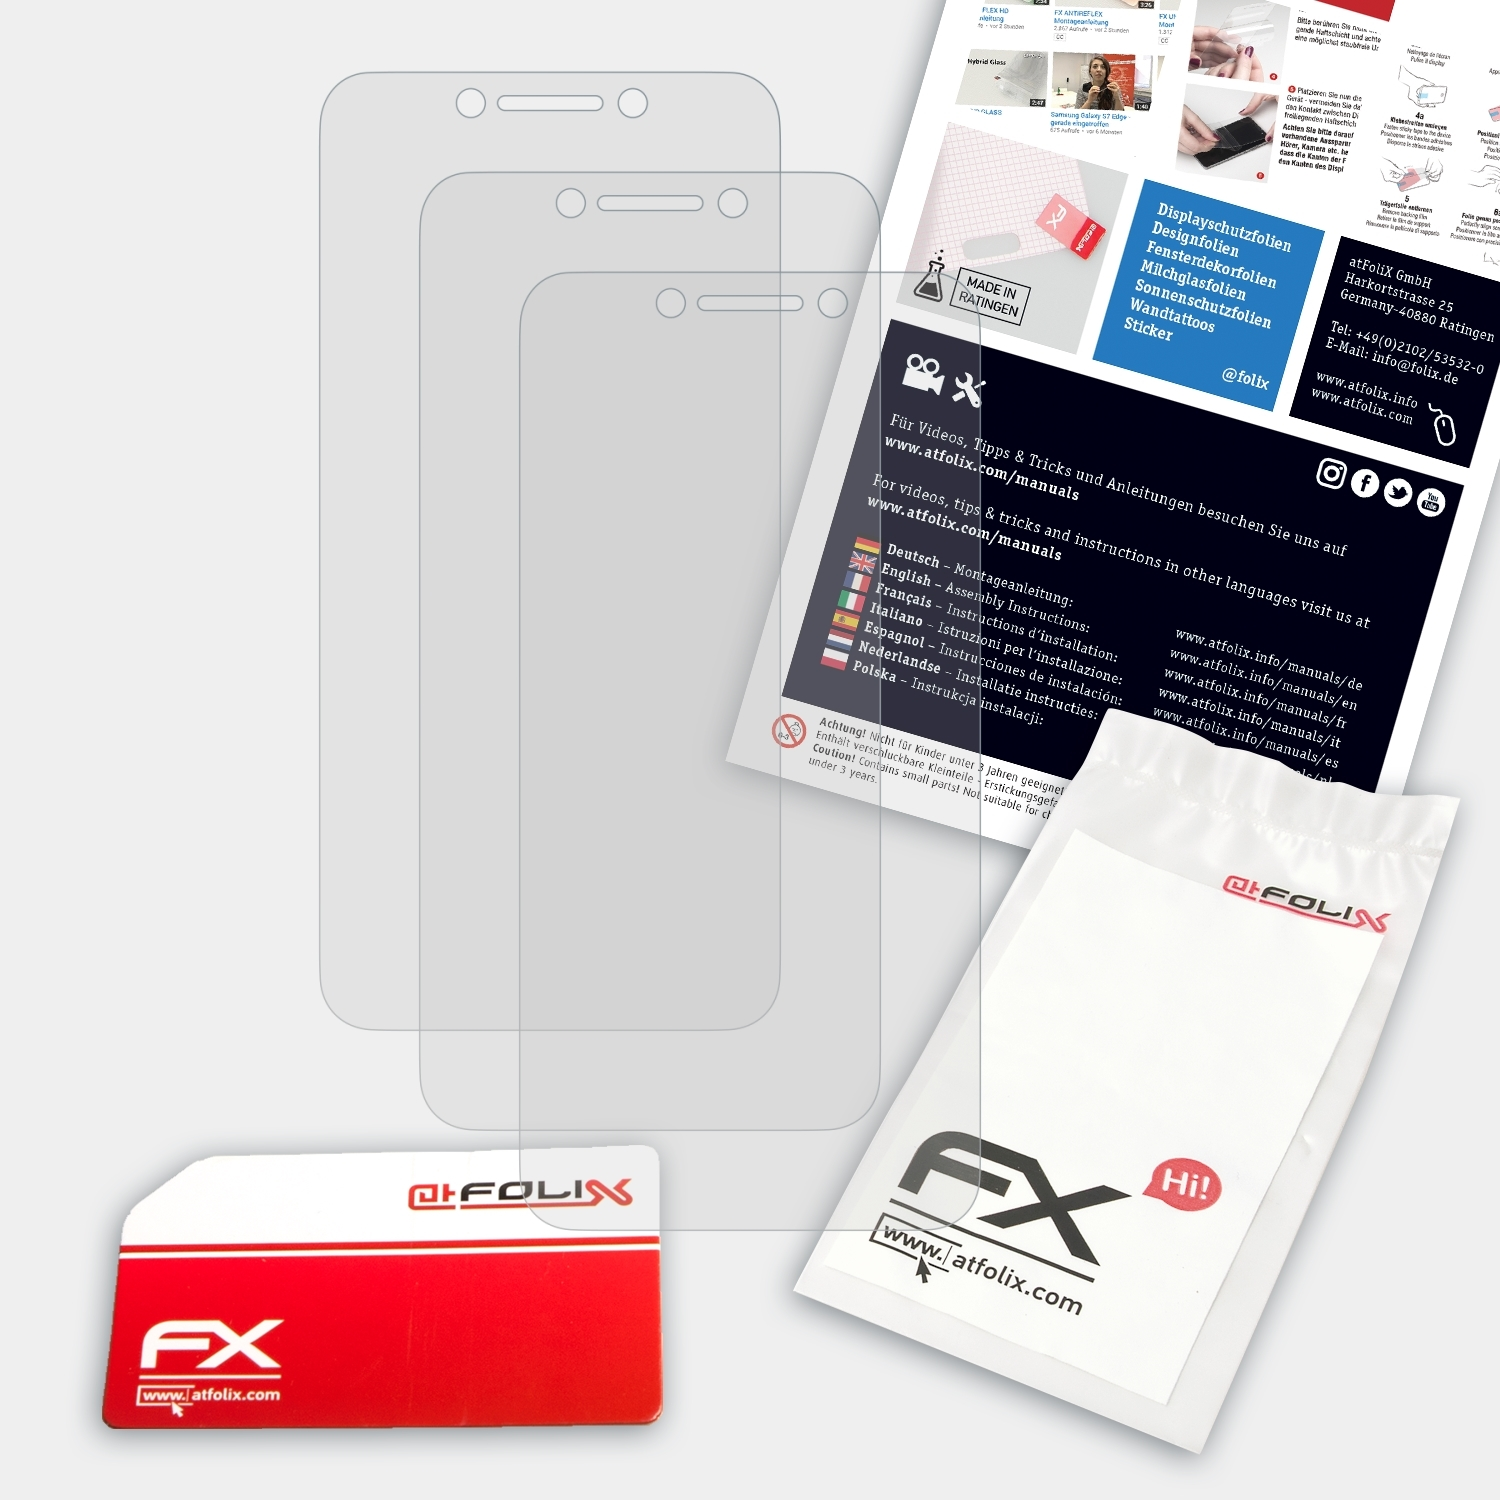 ATFOLIX 3x FX-Antireflex Displayschutz(für Pro 3) Le LeEco